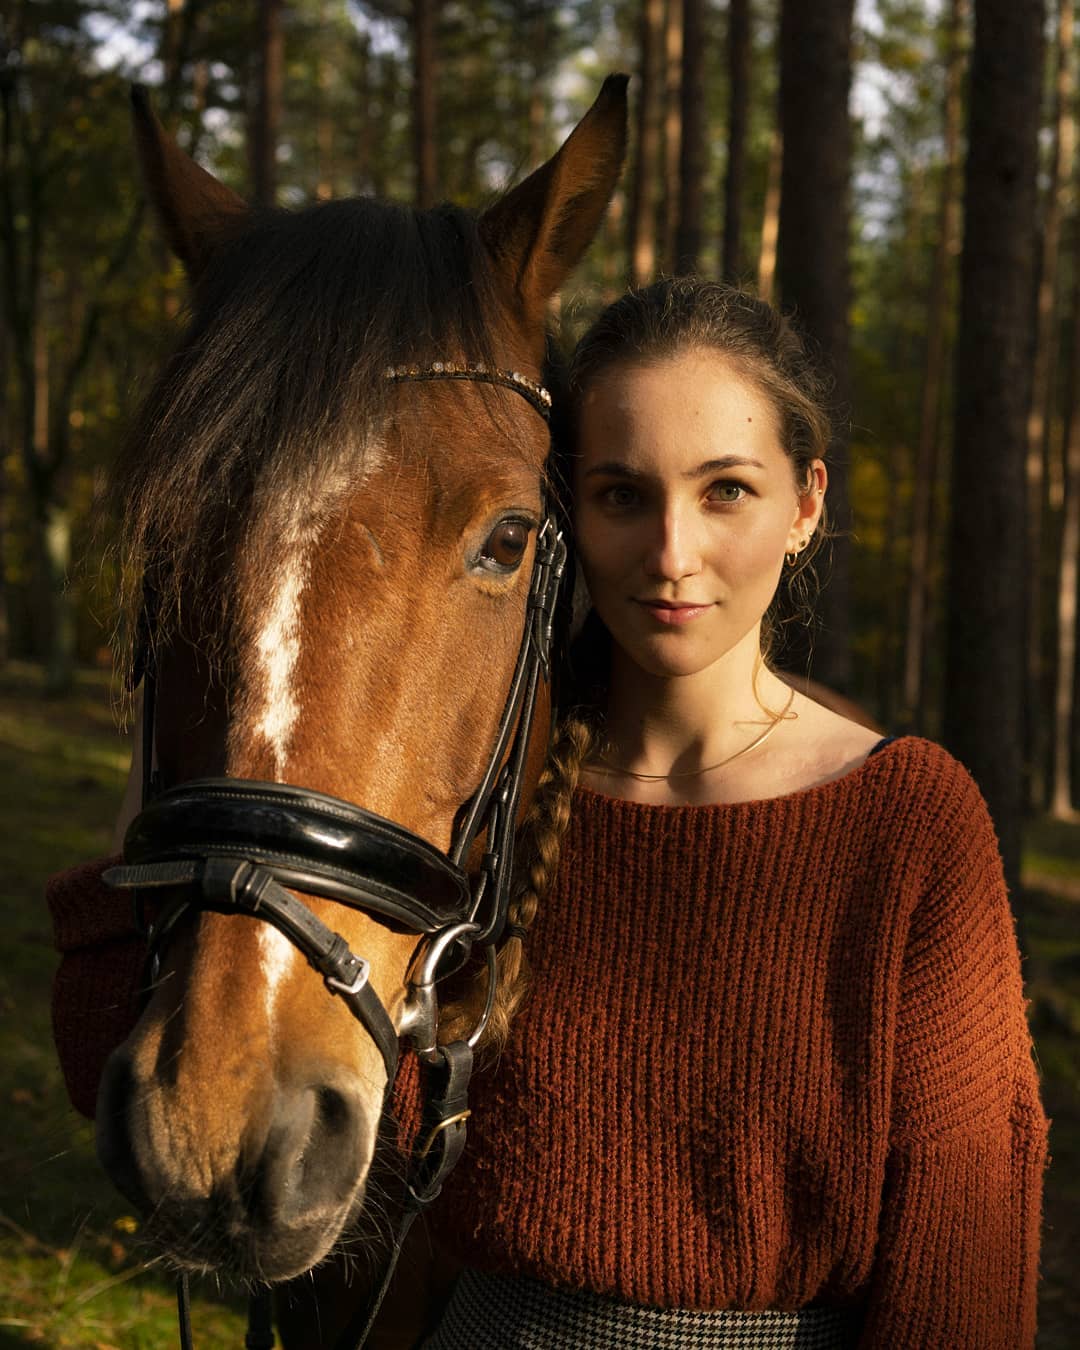 Ihr zwei süßen 🤭🍂☀️

Ich liebe dich 💏 

#autumnforest #horse #photography #horsephotography #colors #orange #berlin #sun #autumnmood #a7rii #vsco #picoftheday